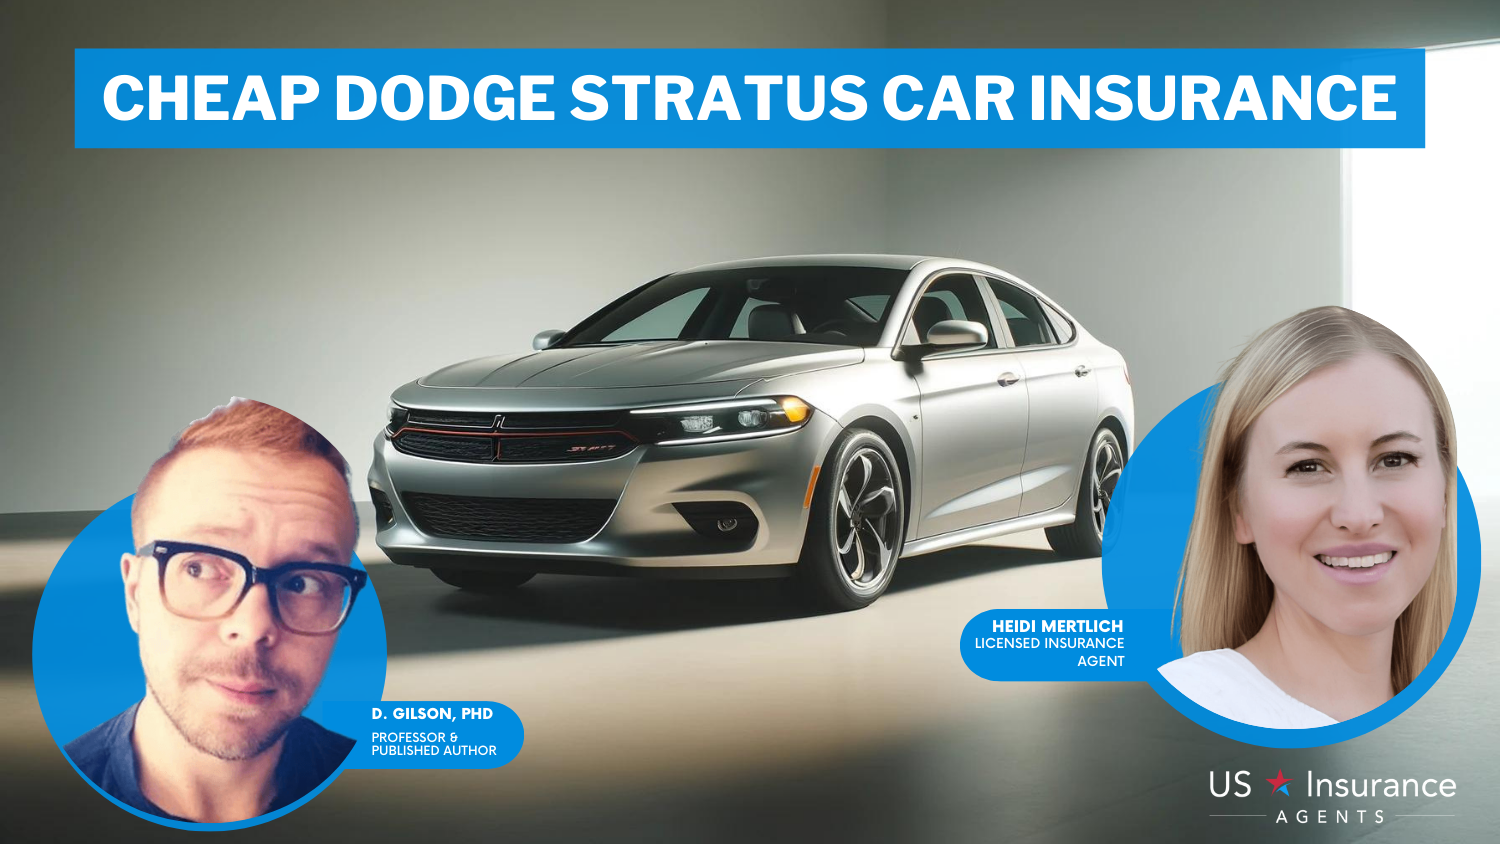 Allstate, Erie Insurance and Progressive: Cheap Dodge Stratus Car Insurance